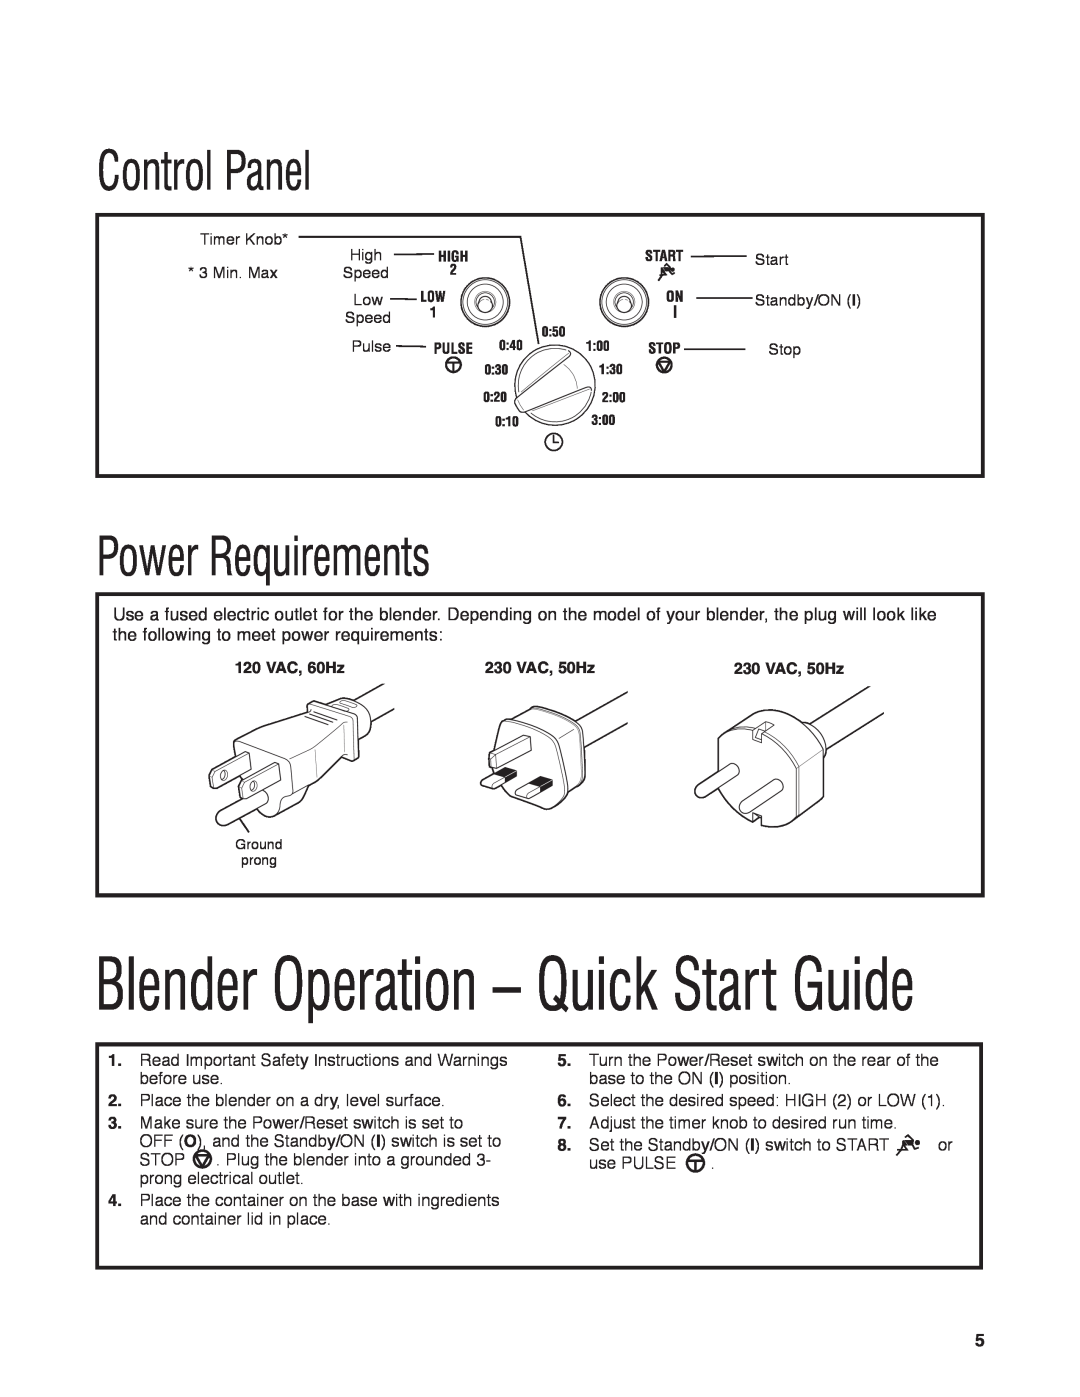 Hamilton Beach HBF400 manuel dutilisation Control Panel, Power Requirements, Blender Operation - Quick Start Guide 